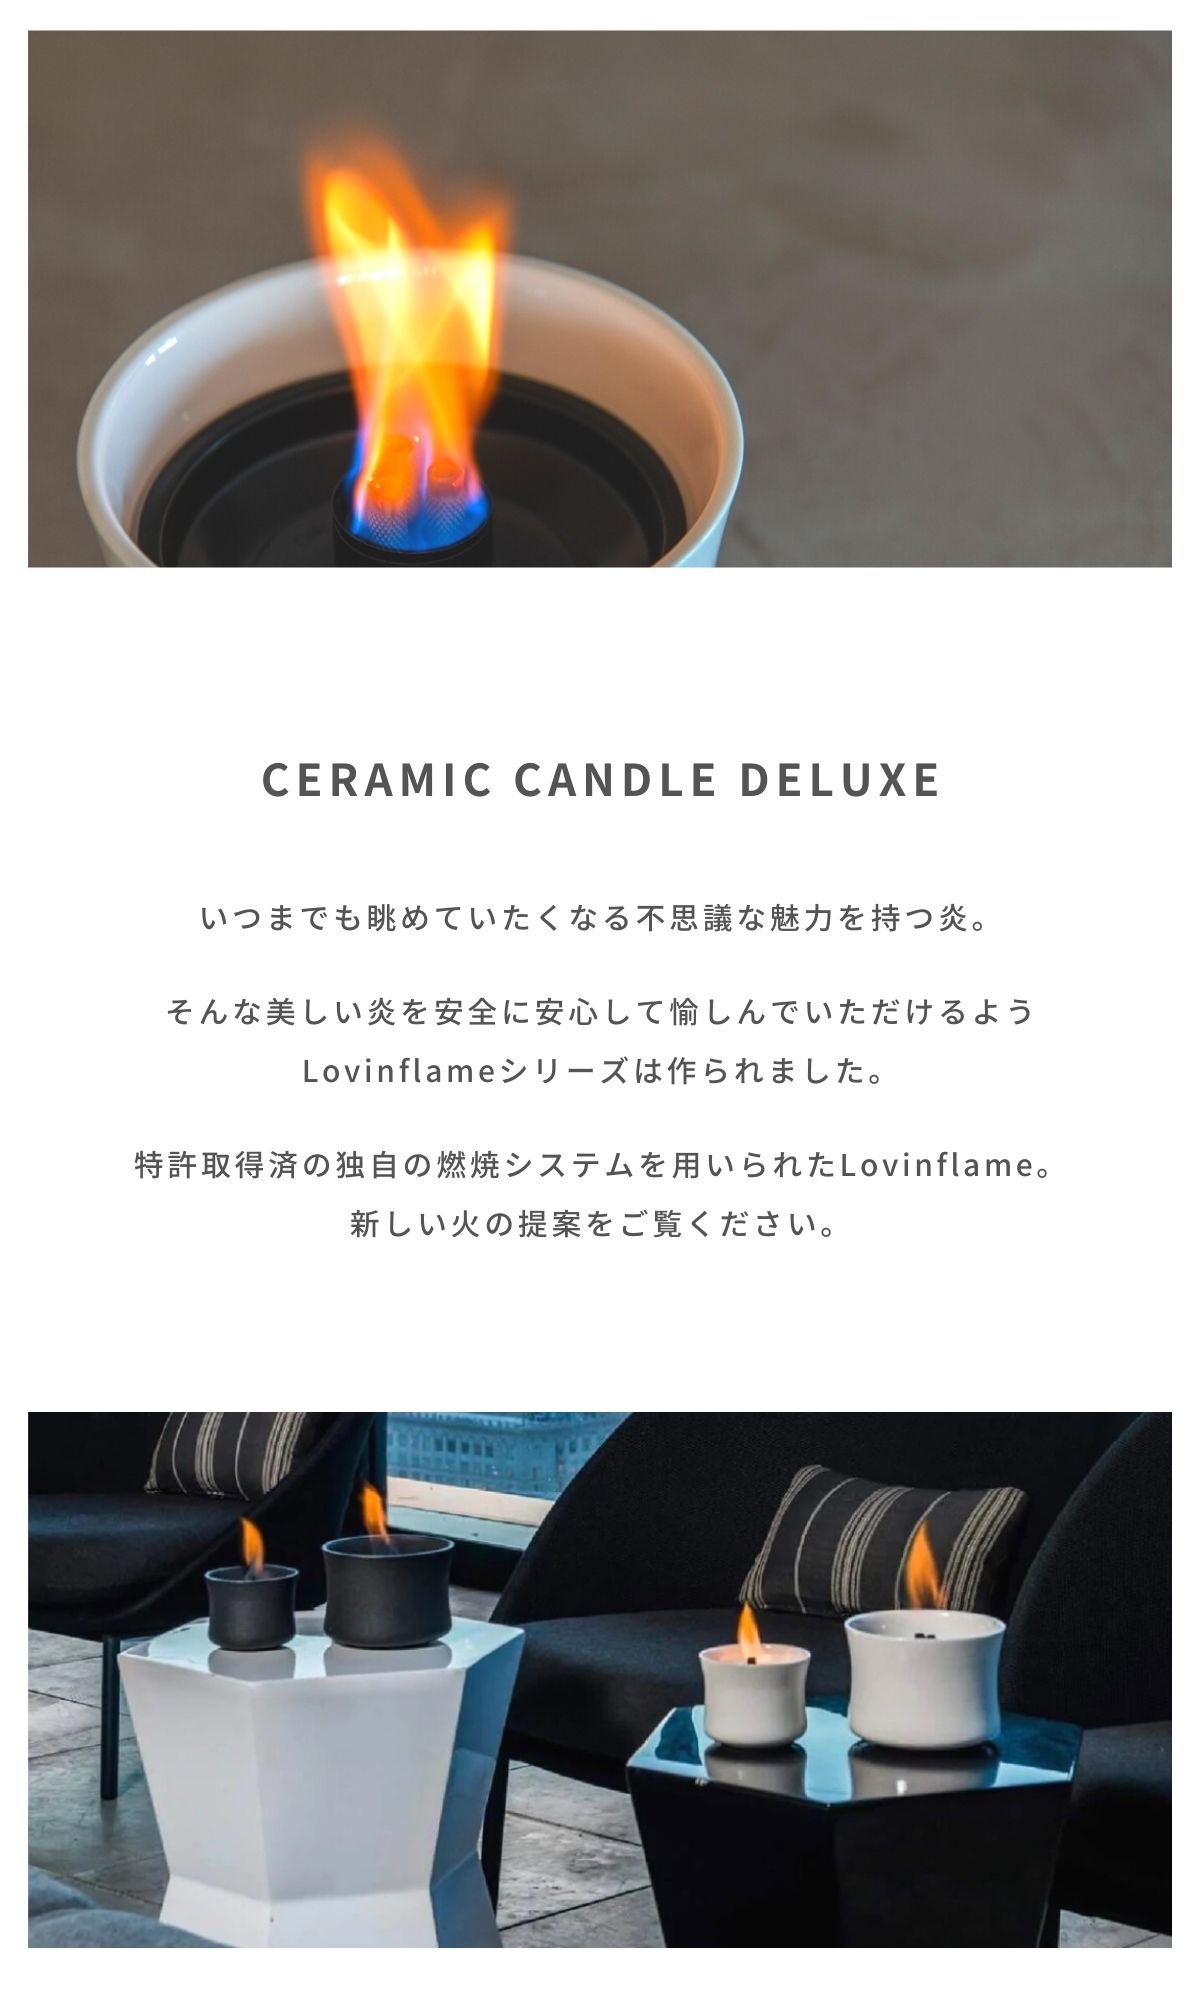 【Lovinflame セラミックキャンドルデラックス 専用燃料セット】の商品情報詳細